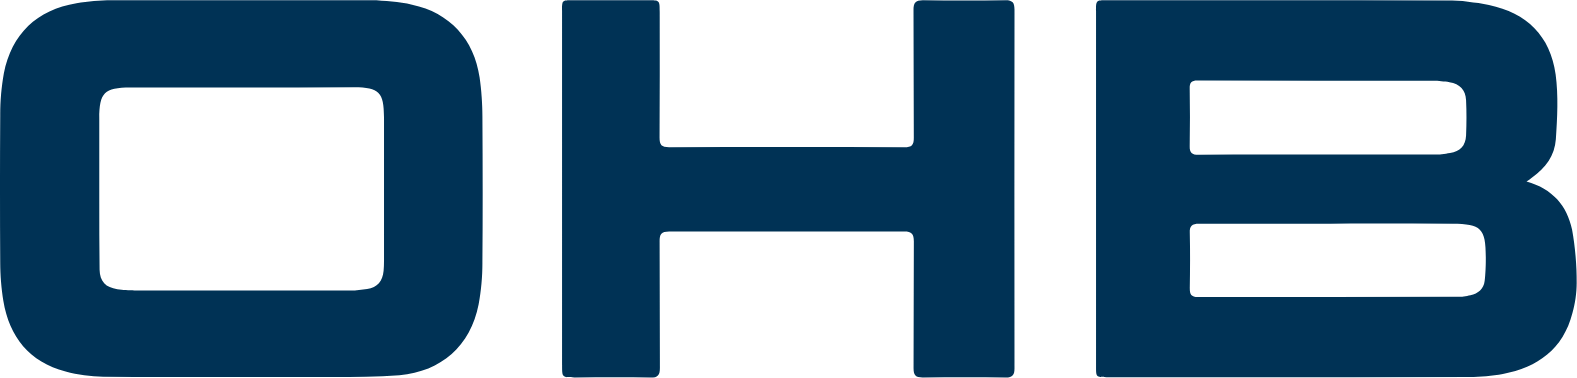 OHB SE logo (transparent PNG)